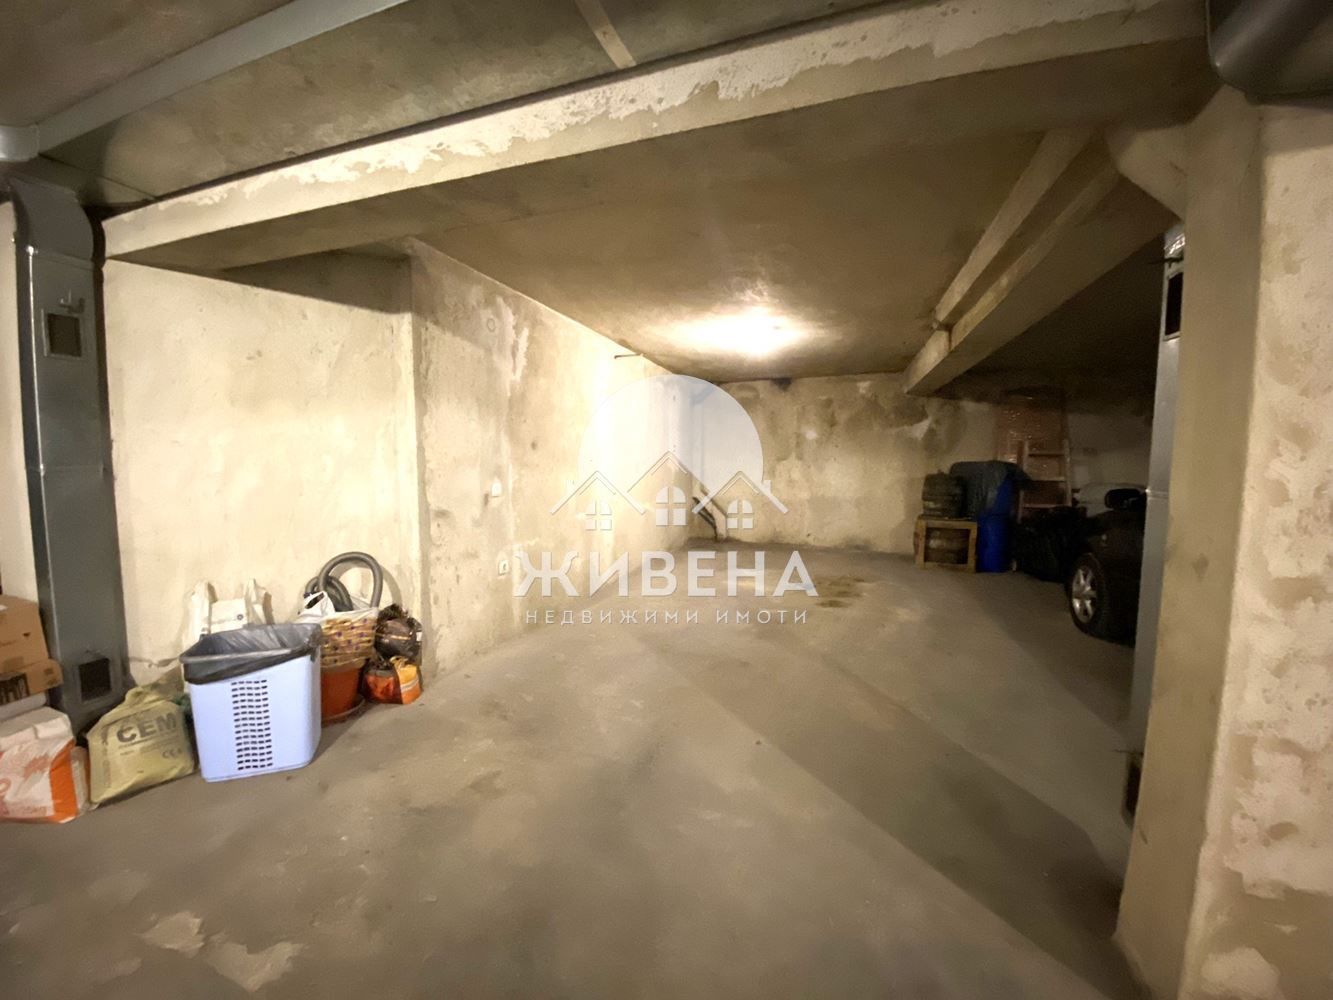 Гараж в подземен паркинг, под наем, в района на Операта, площ 20 кв.м